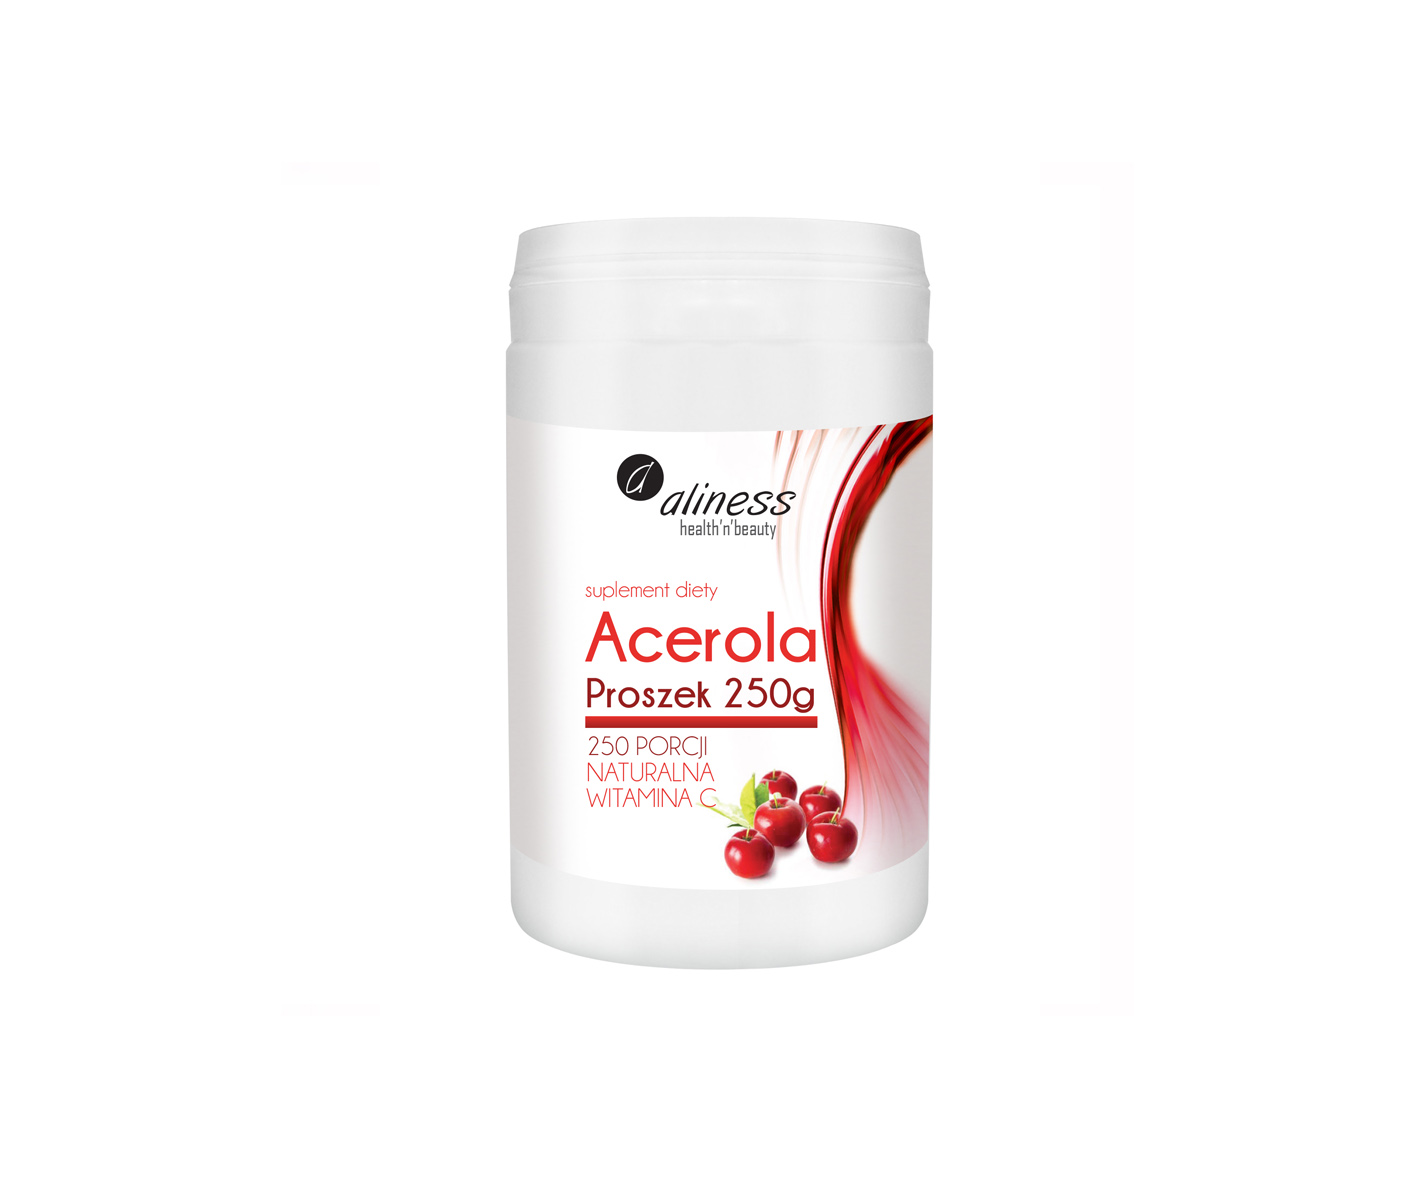 Aliness, Acerola, Vitamin C, powder for immunity